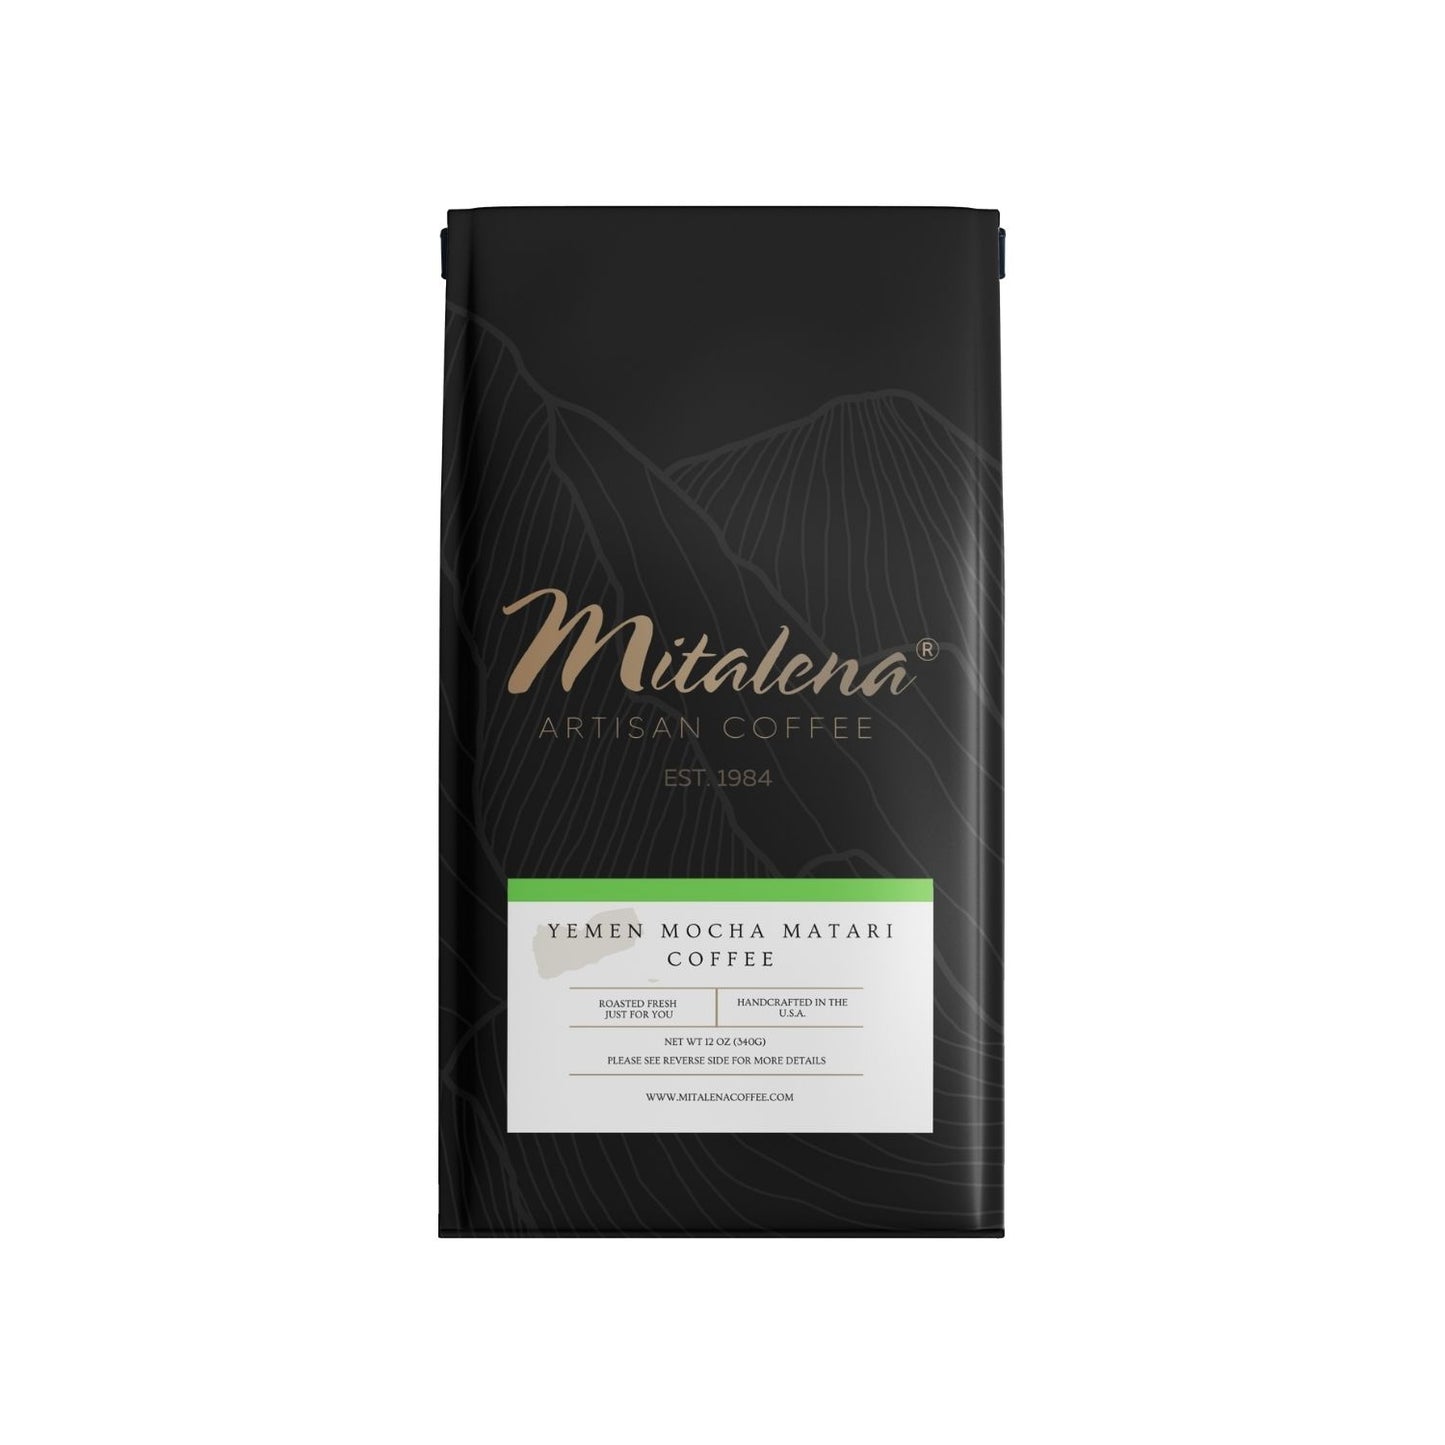 Mitalena Coffee - Yemen Mocha Matari Green, 12 oz.